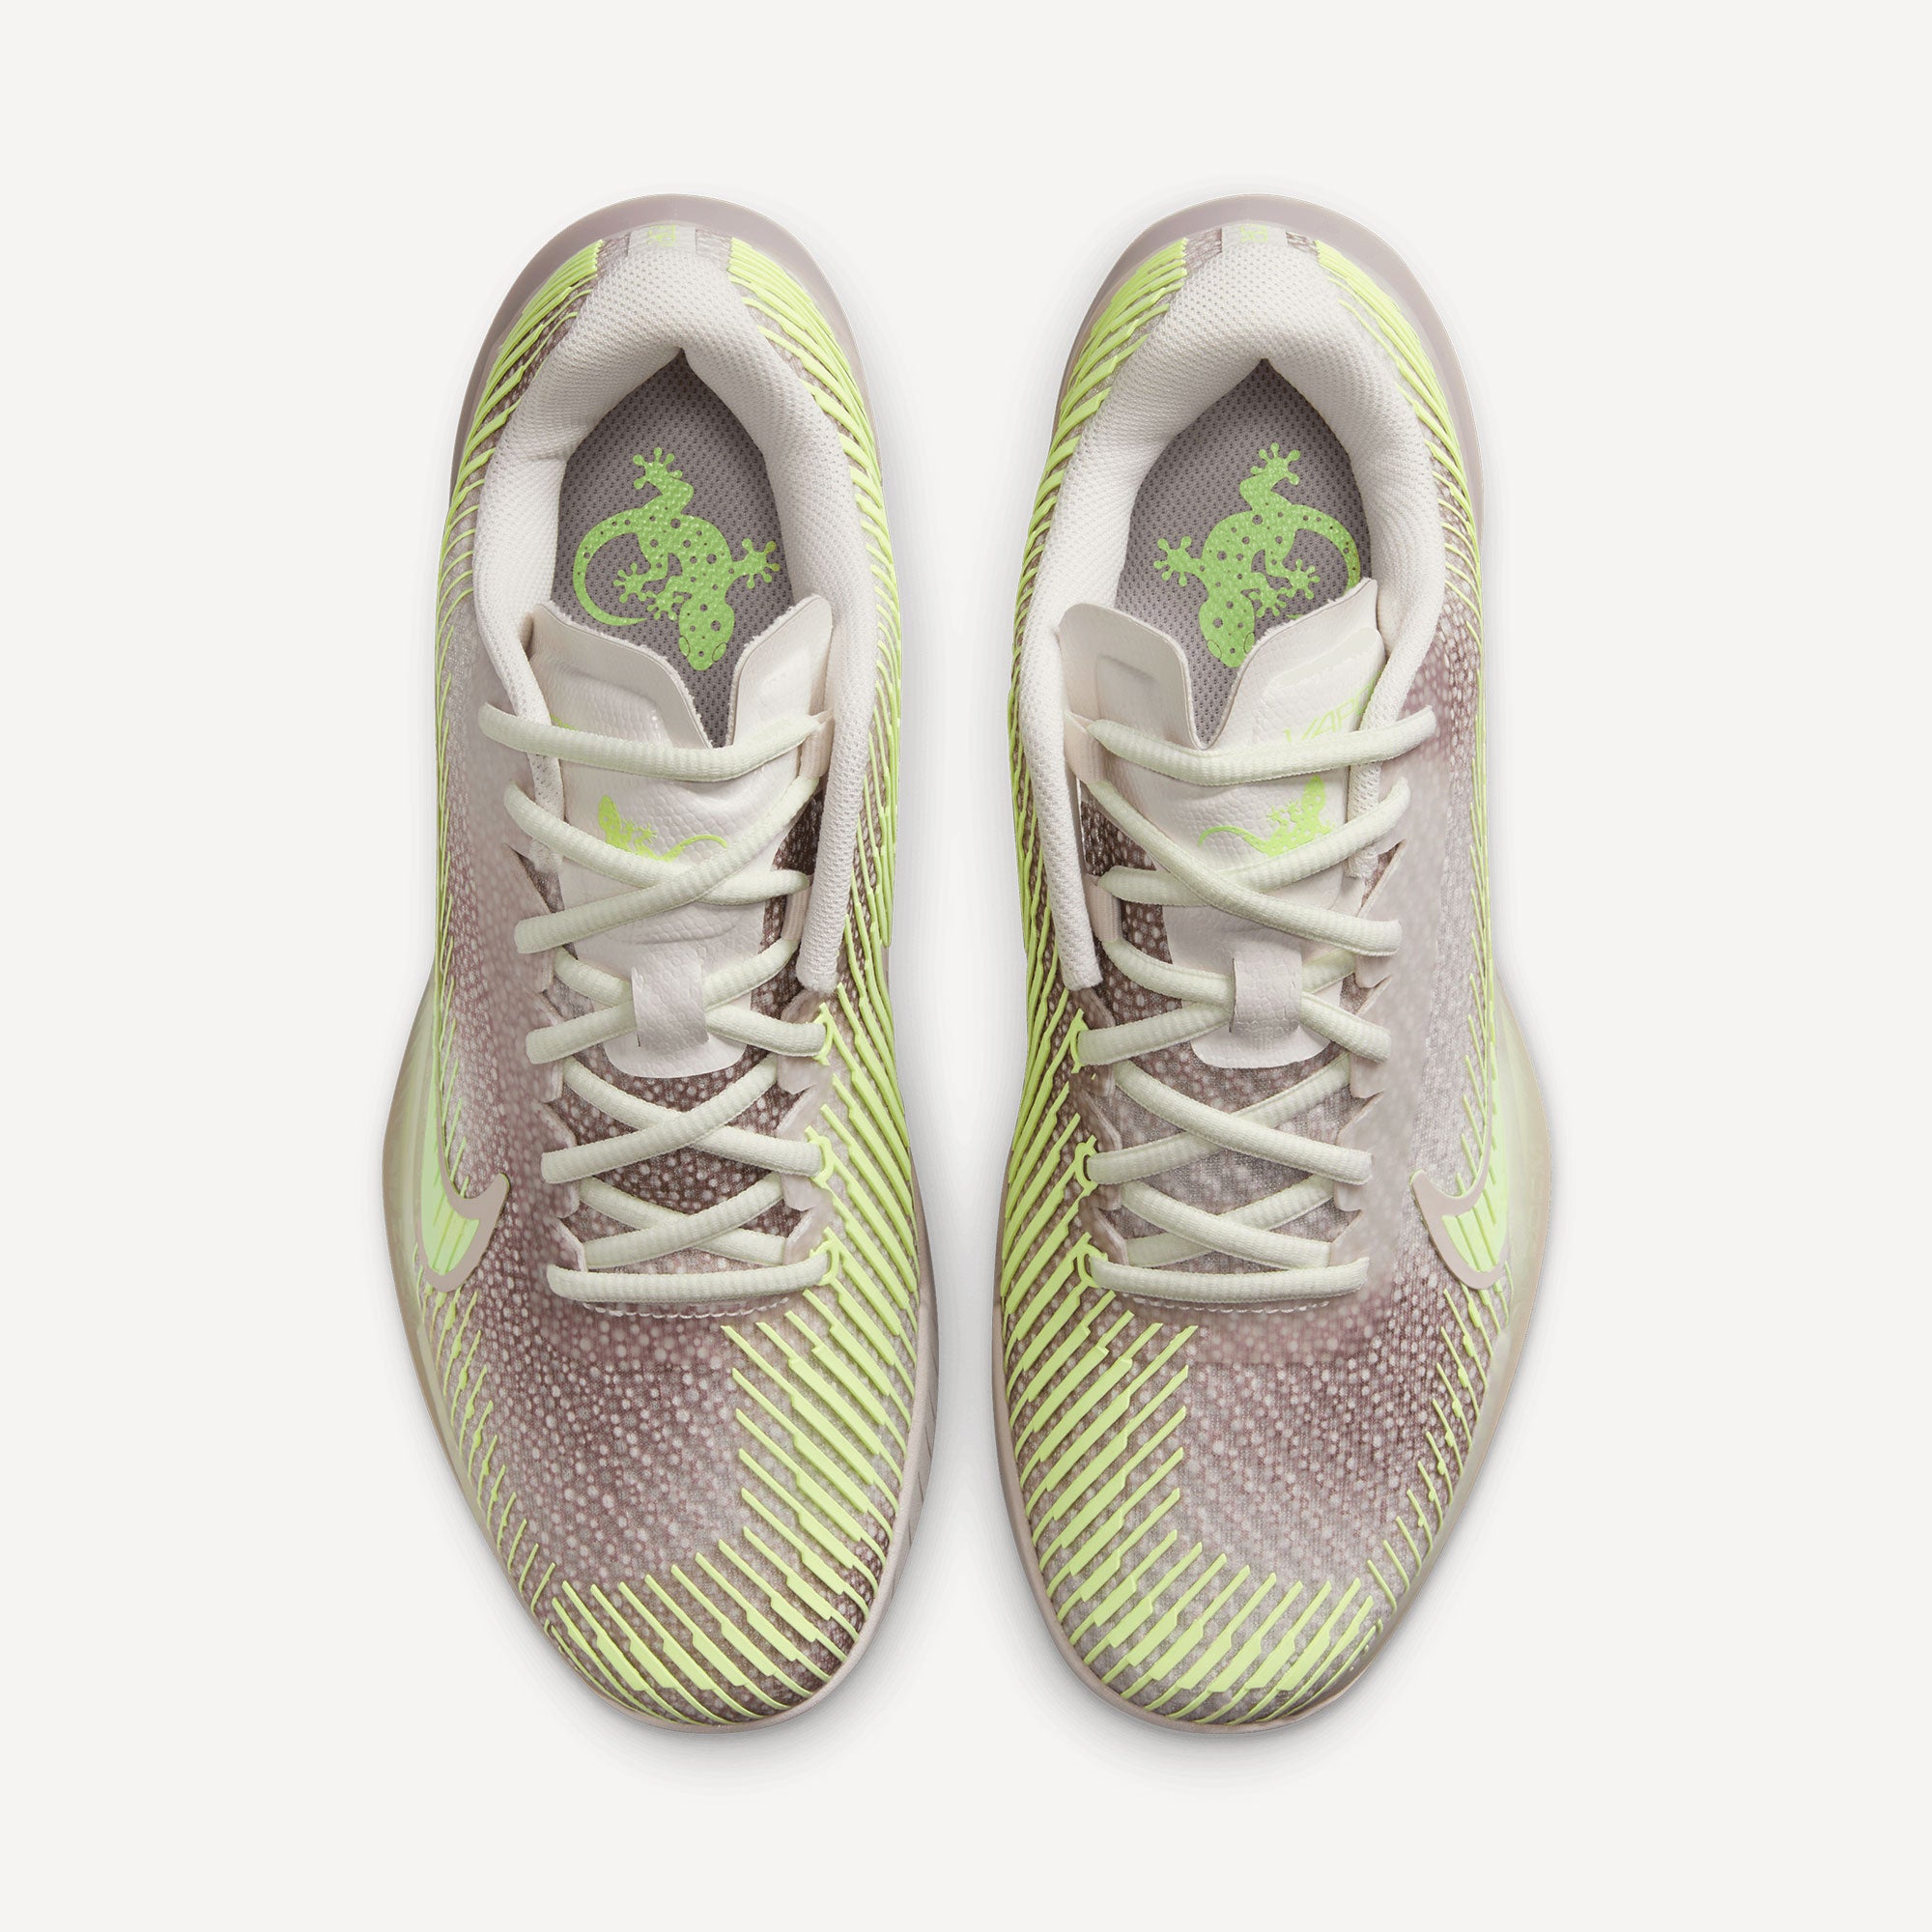 NikeCourt Air Zoom Vapor 11 Premium Women's Hard Court Tennis Shoes - Grey (6)